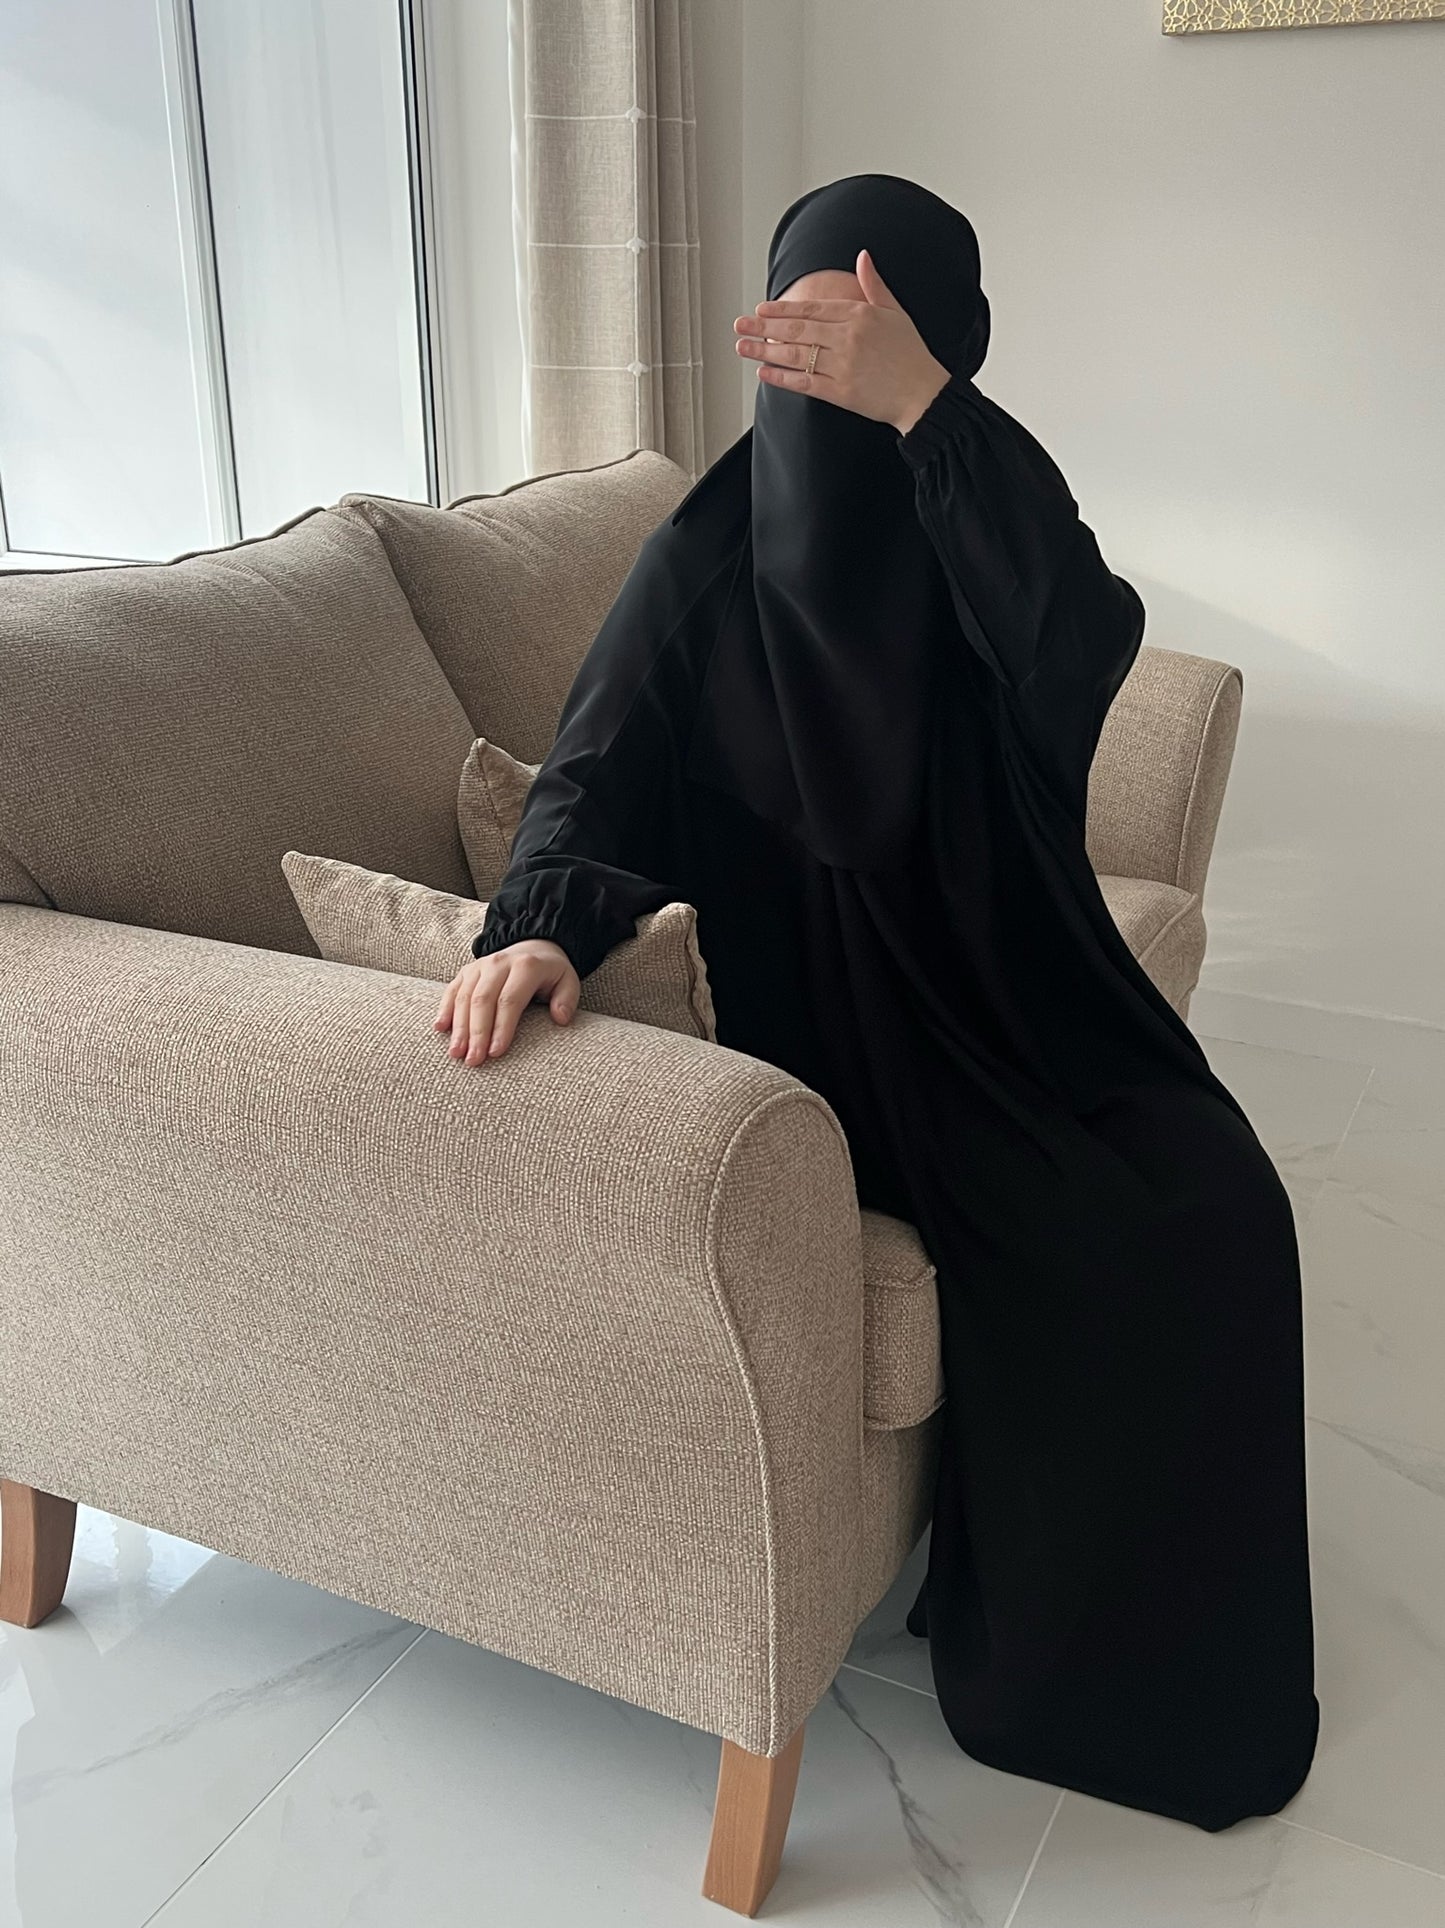 SALE Black Jilbab with matching niqaab